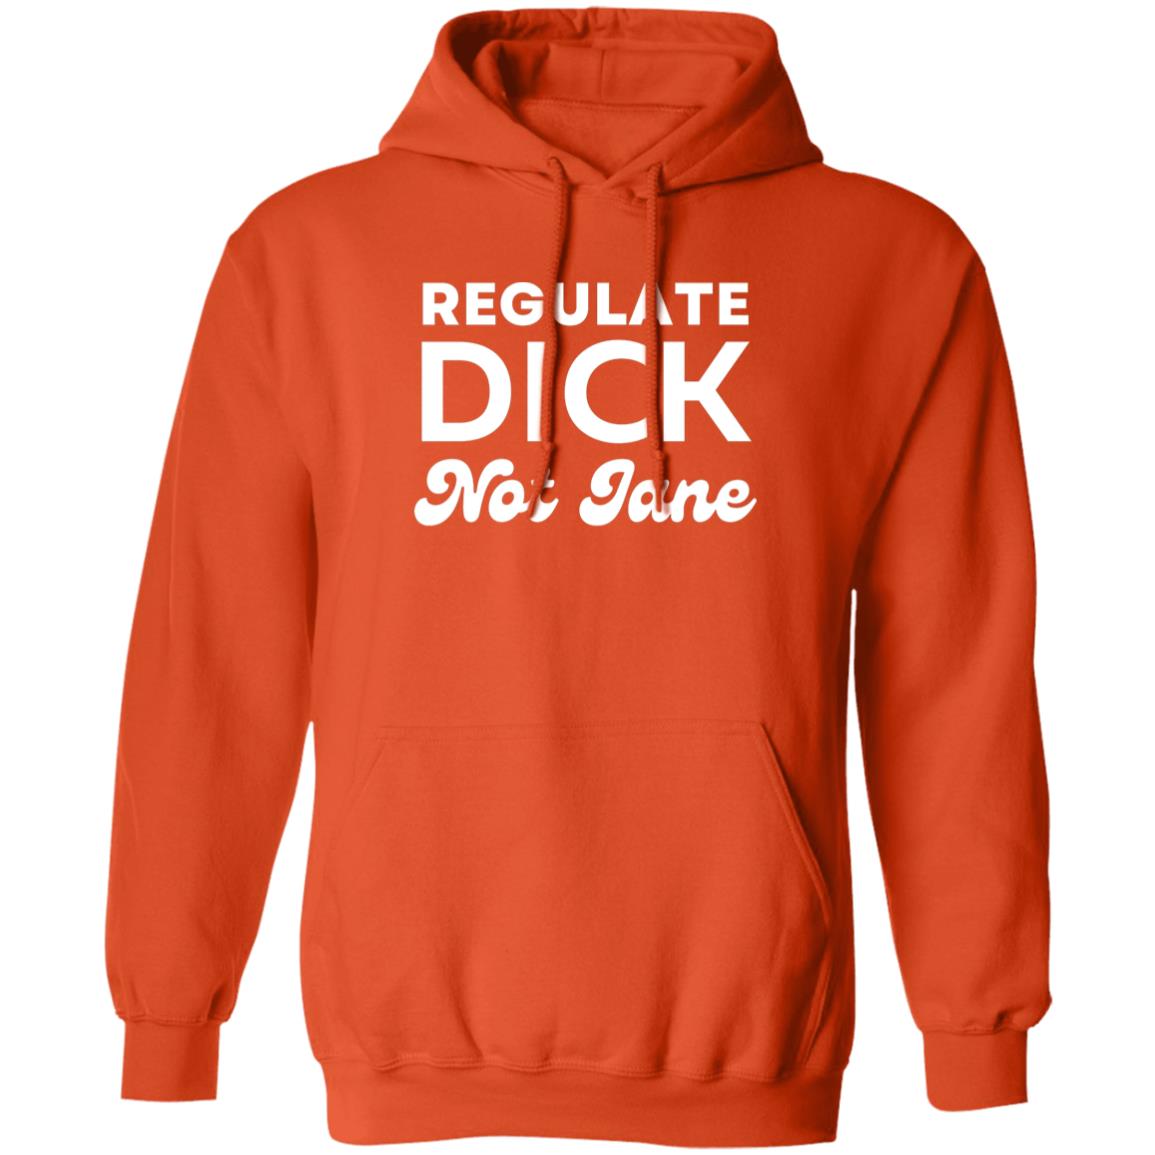 Regulate Dick Not Jane Hooded Sweatshirt